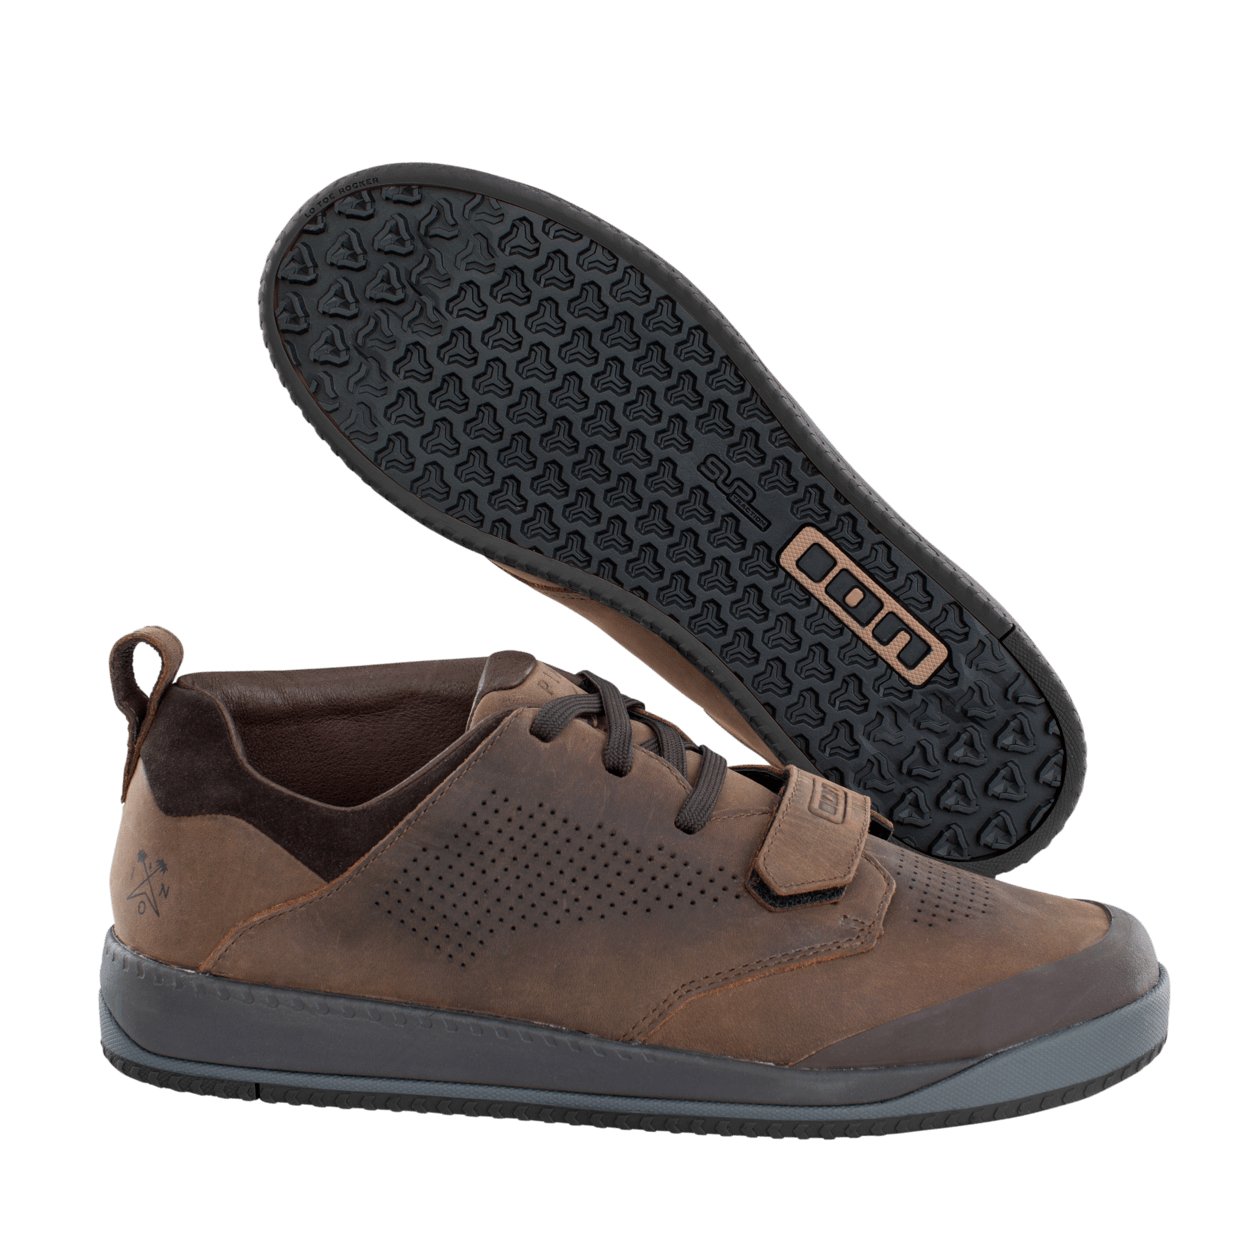 ION MTB Flat Pedal Shoes Scrub Select 2023 - Worthing Watersports - 9008415908639 - Footwear - ION Bike